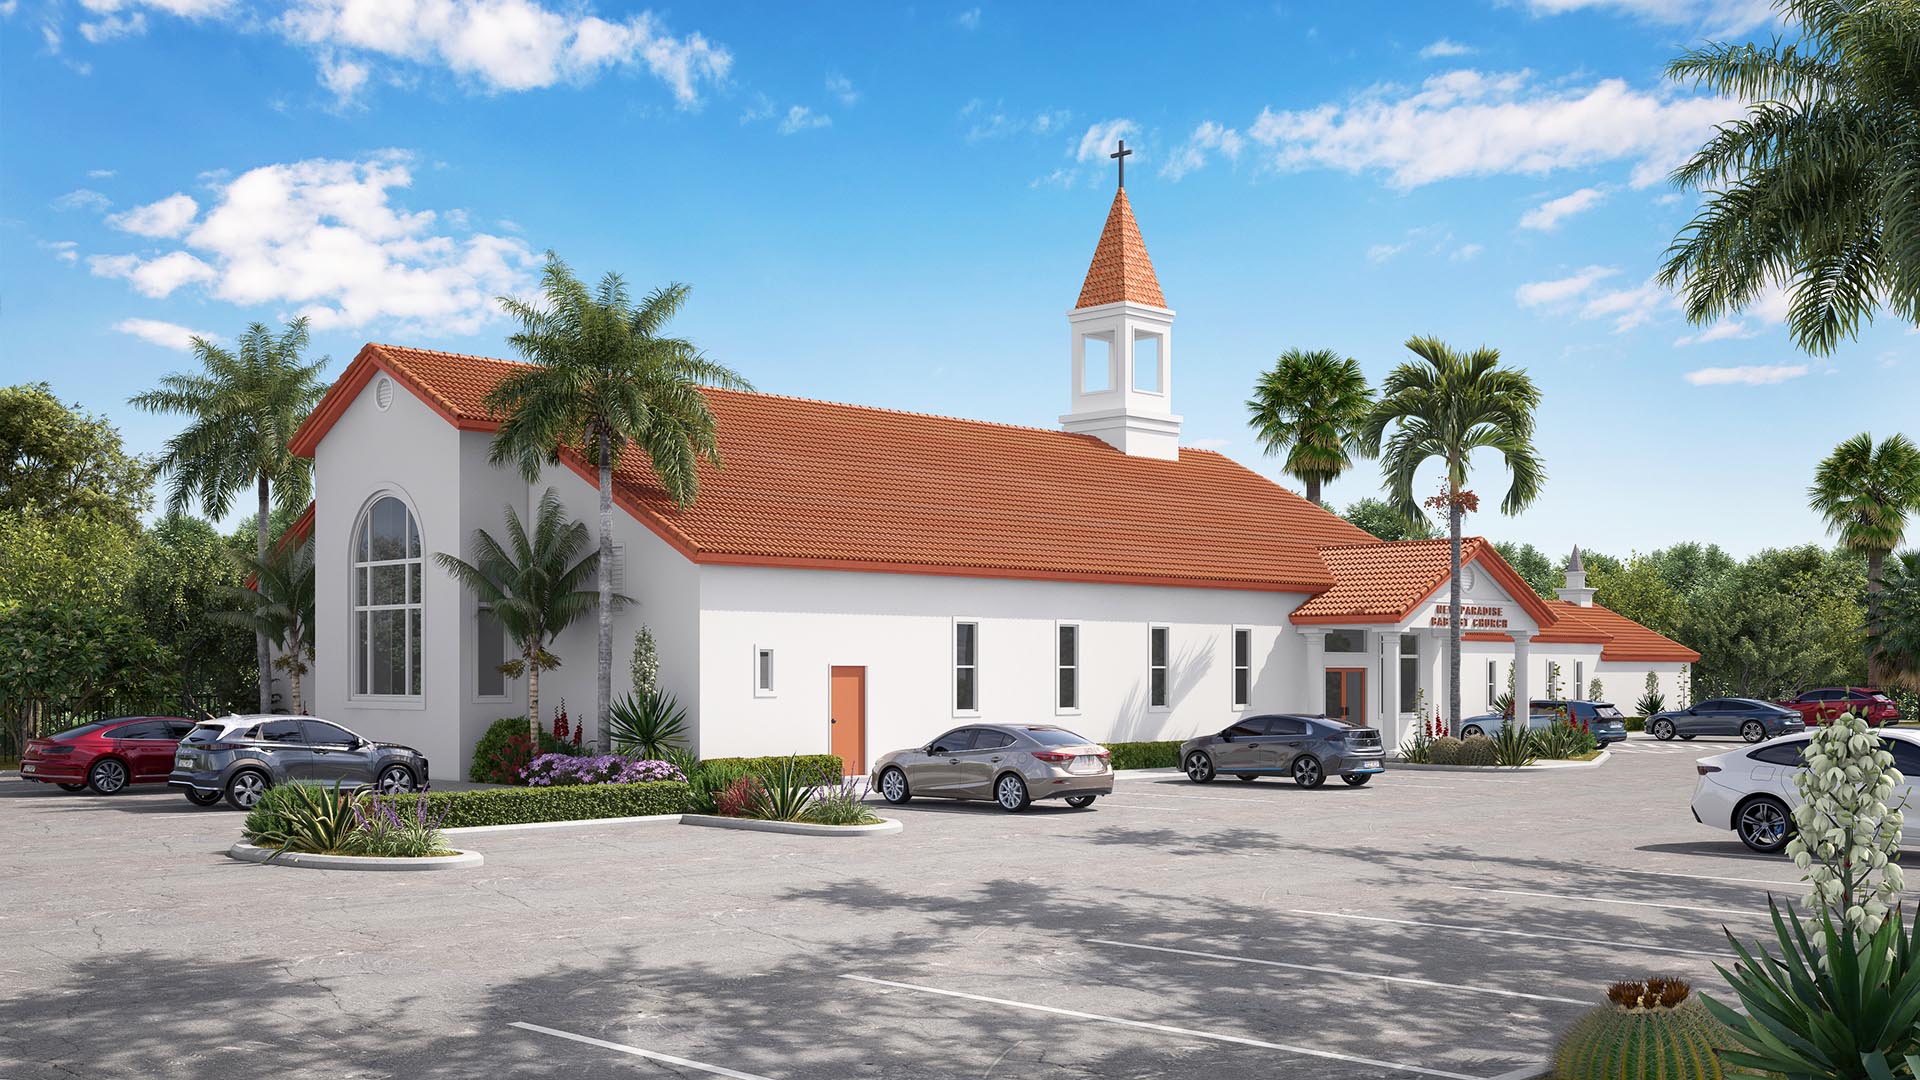 3D Render Exterior Paradise church